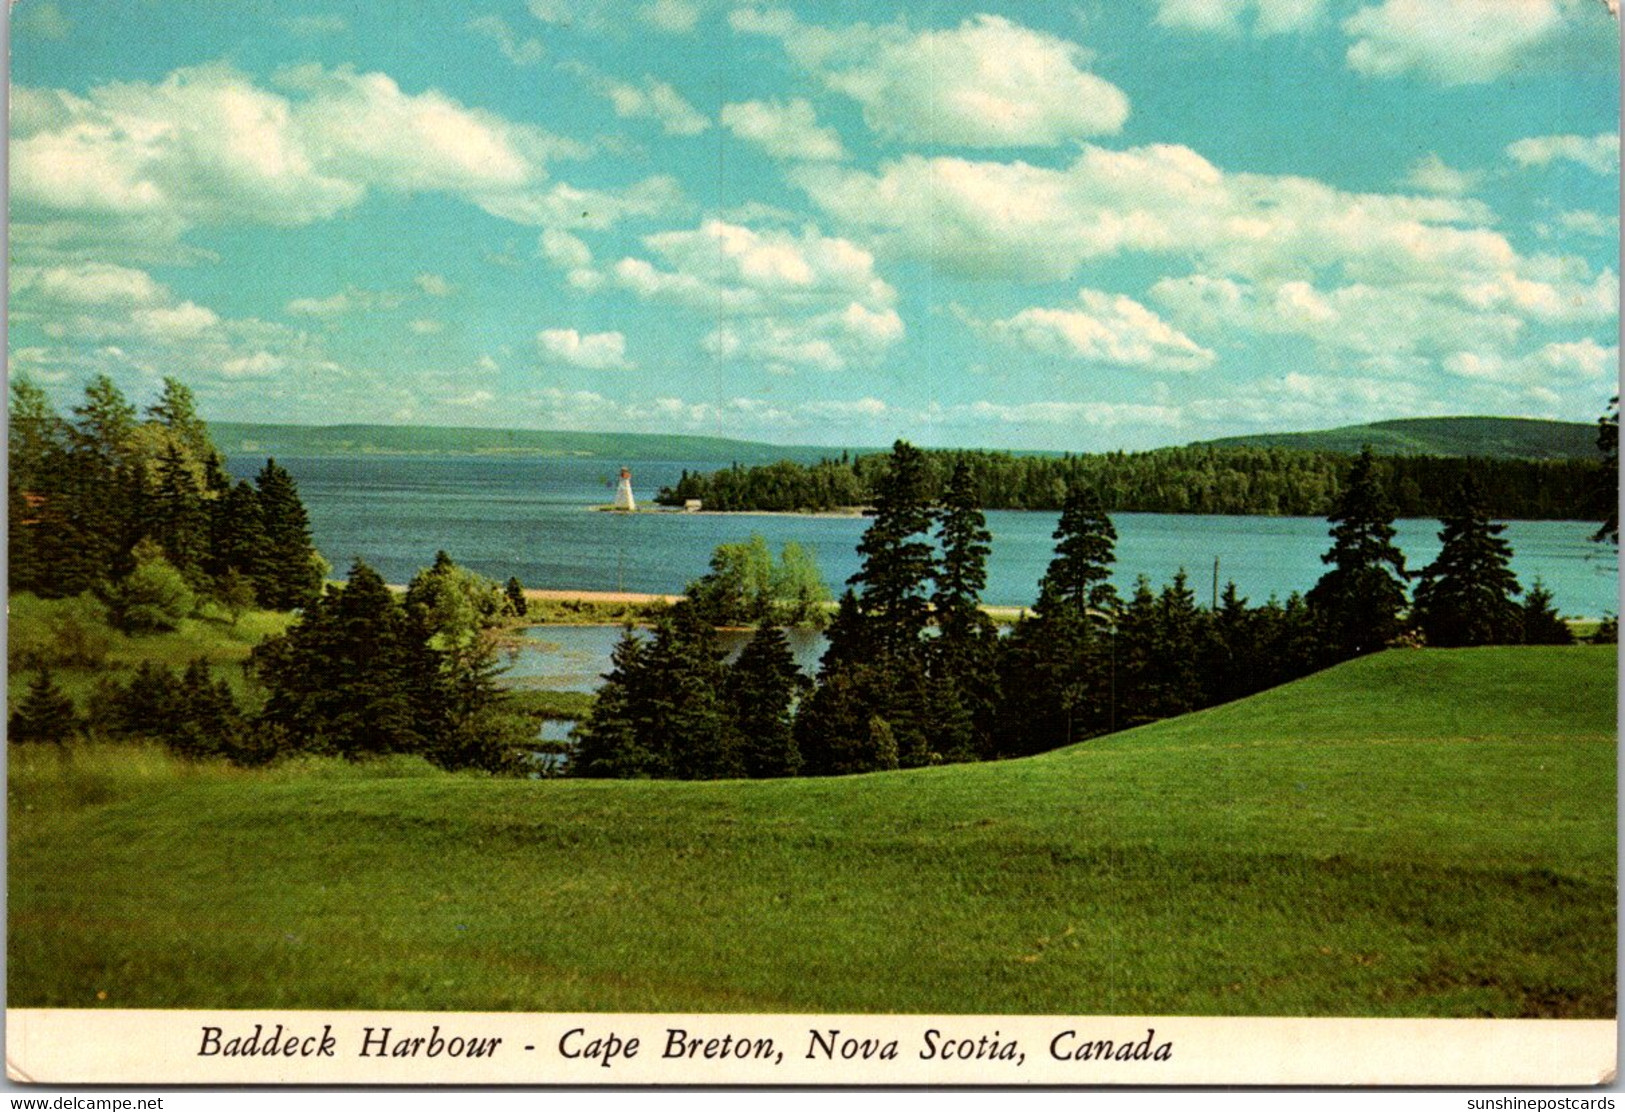 Canada Nova Scotia Cape Breton Baddeck Harbor - Cape Breton